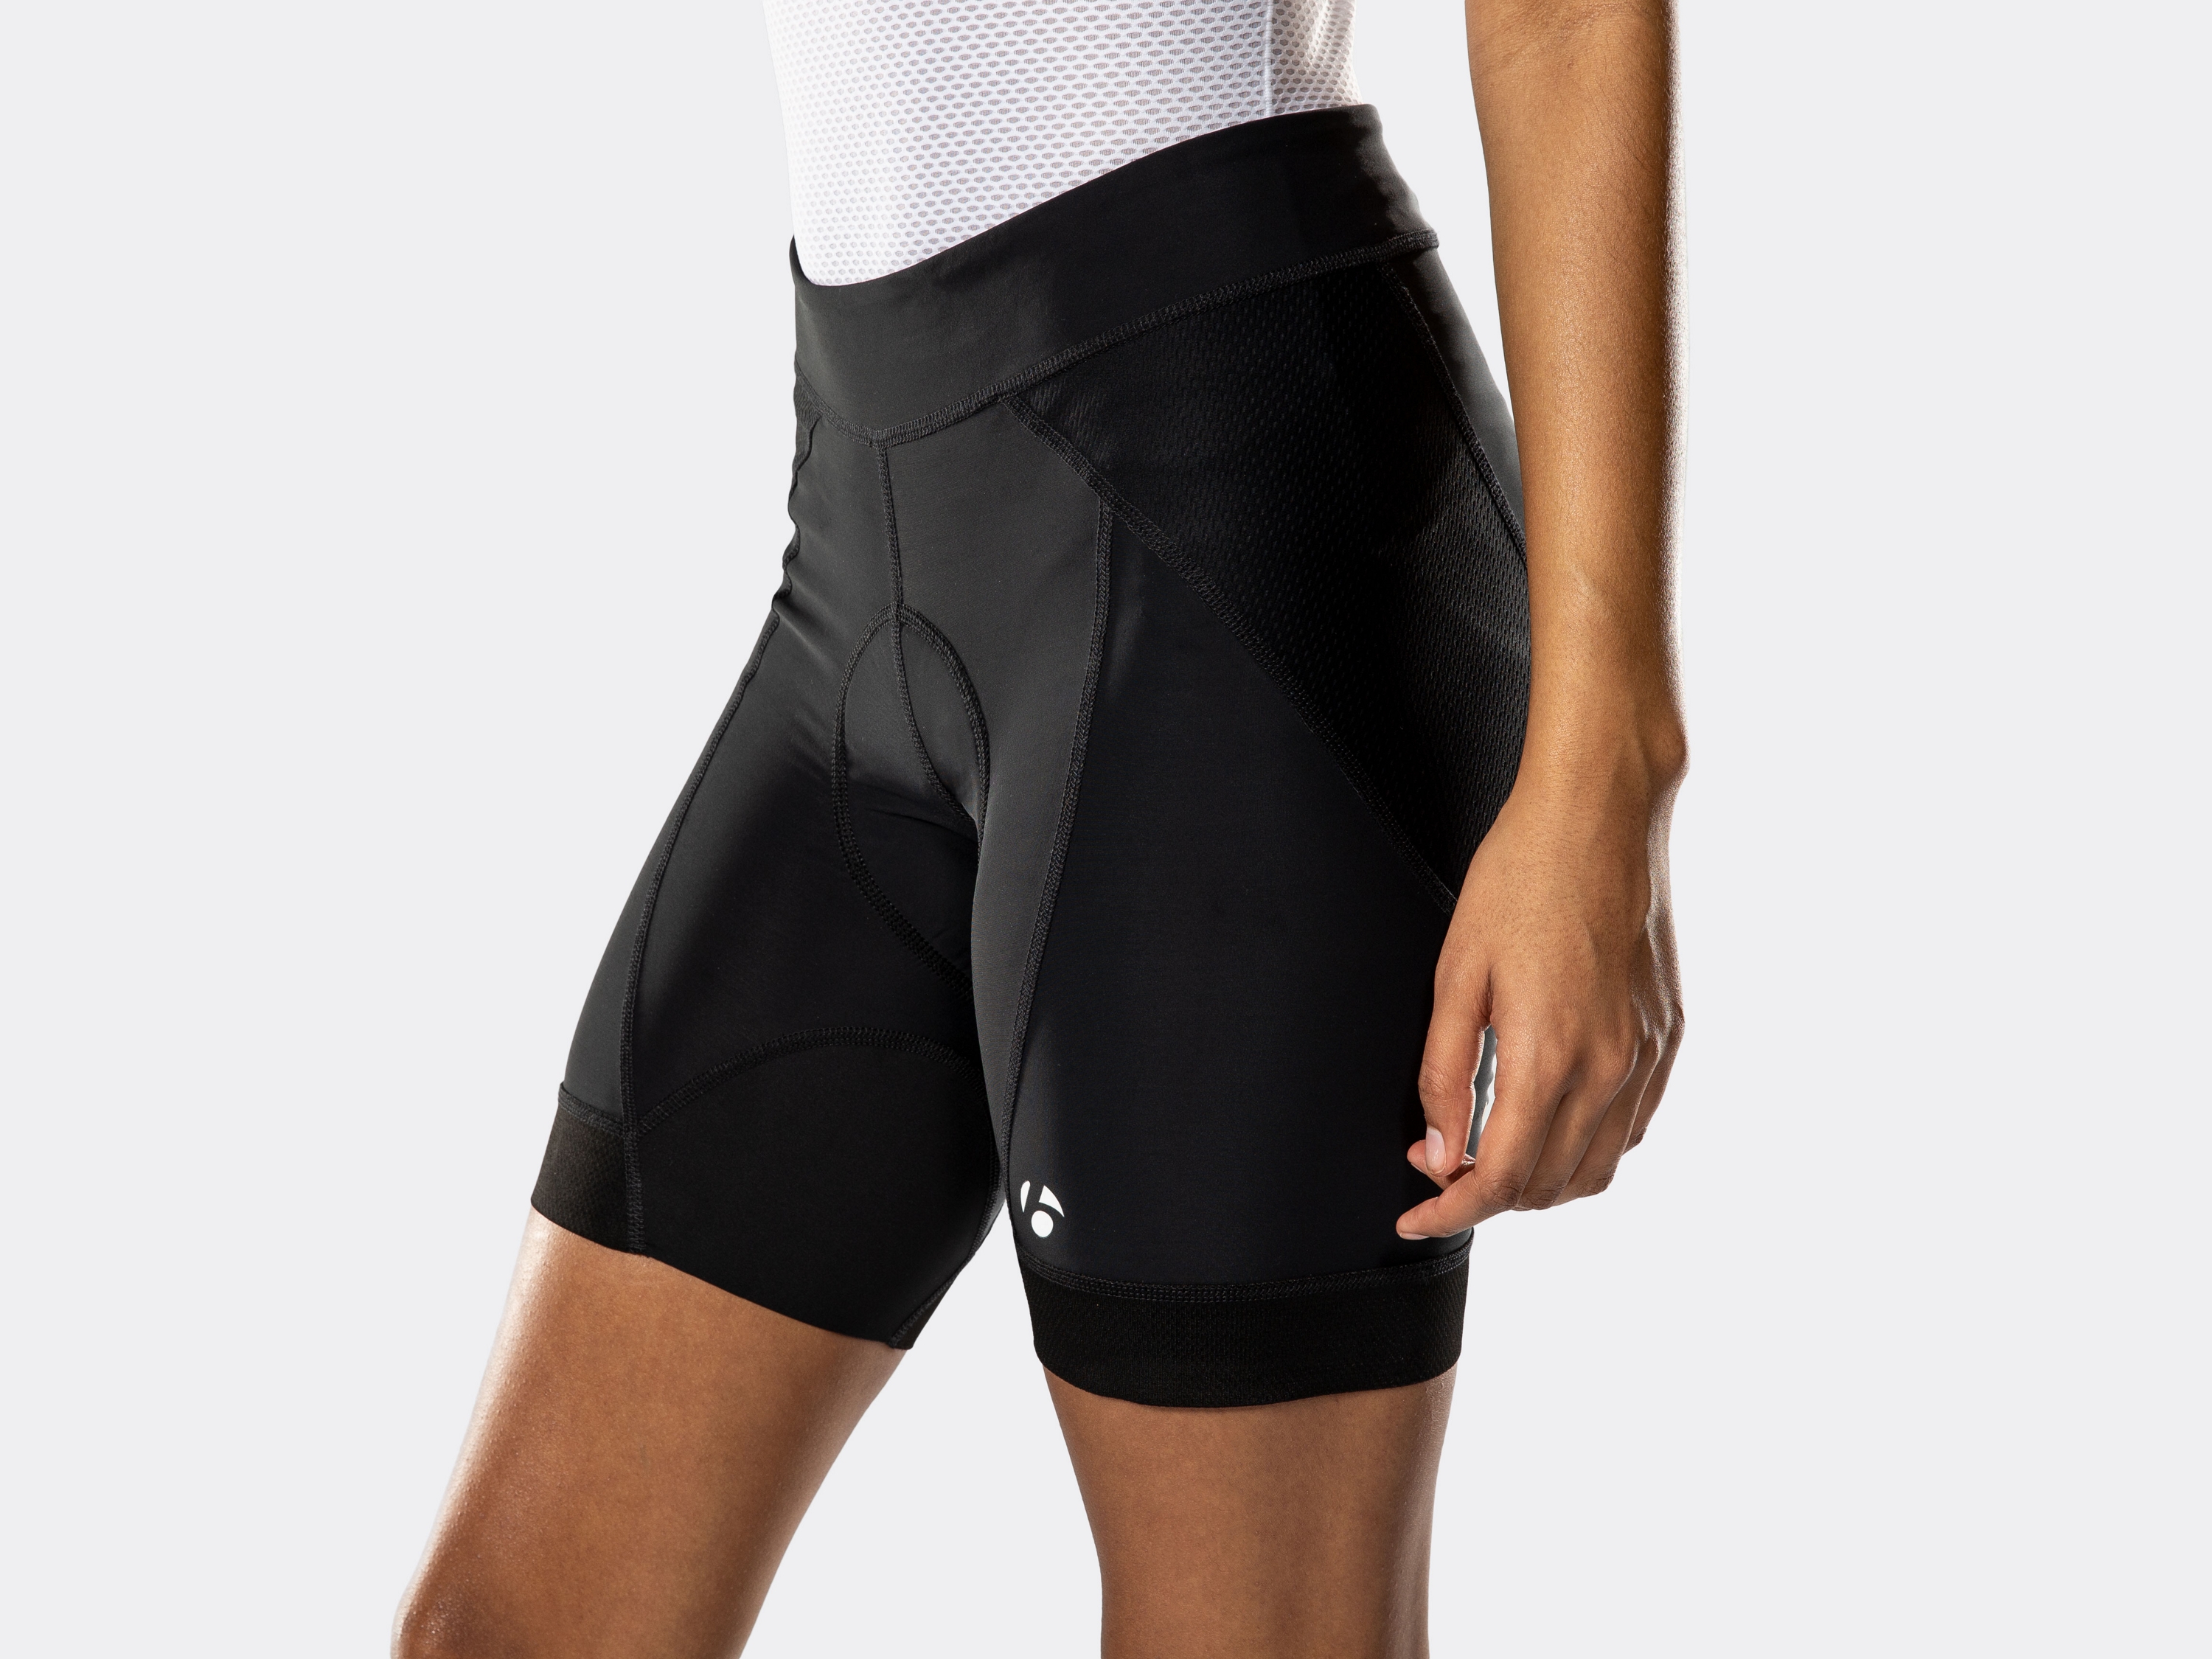 bontrager shorts